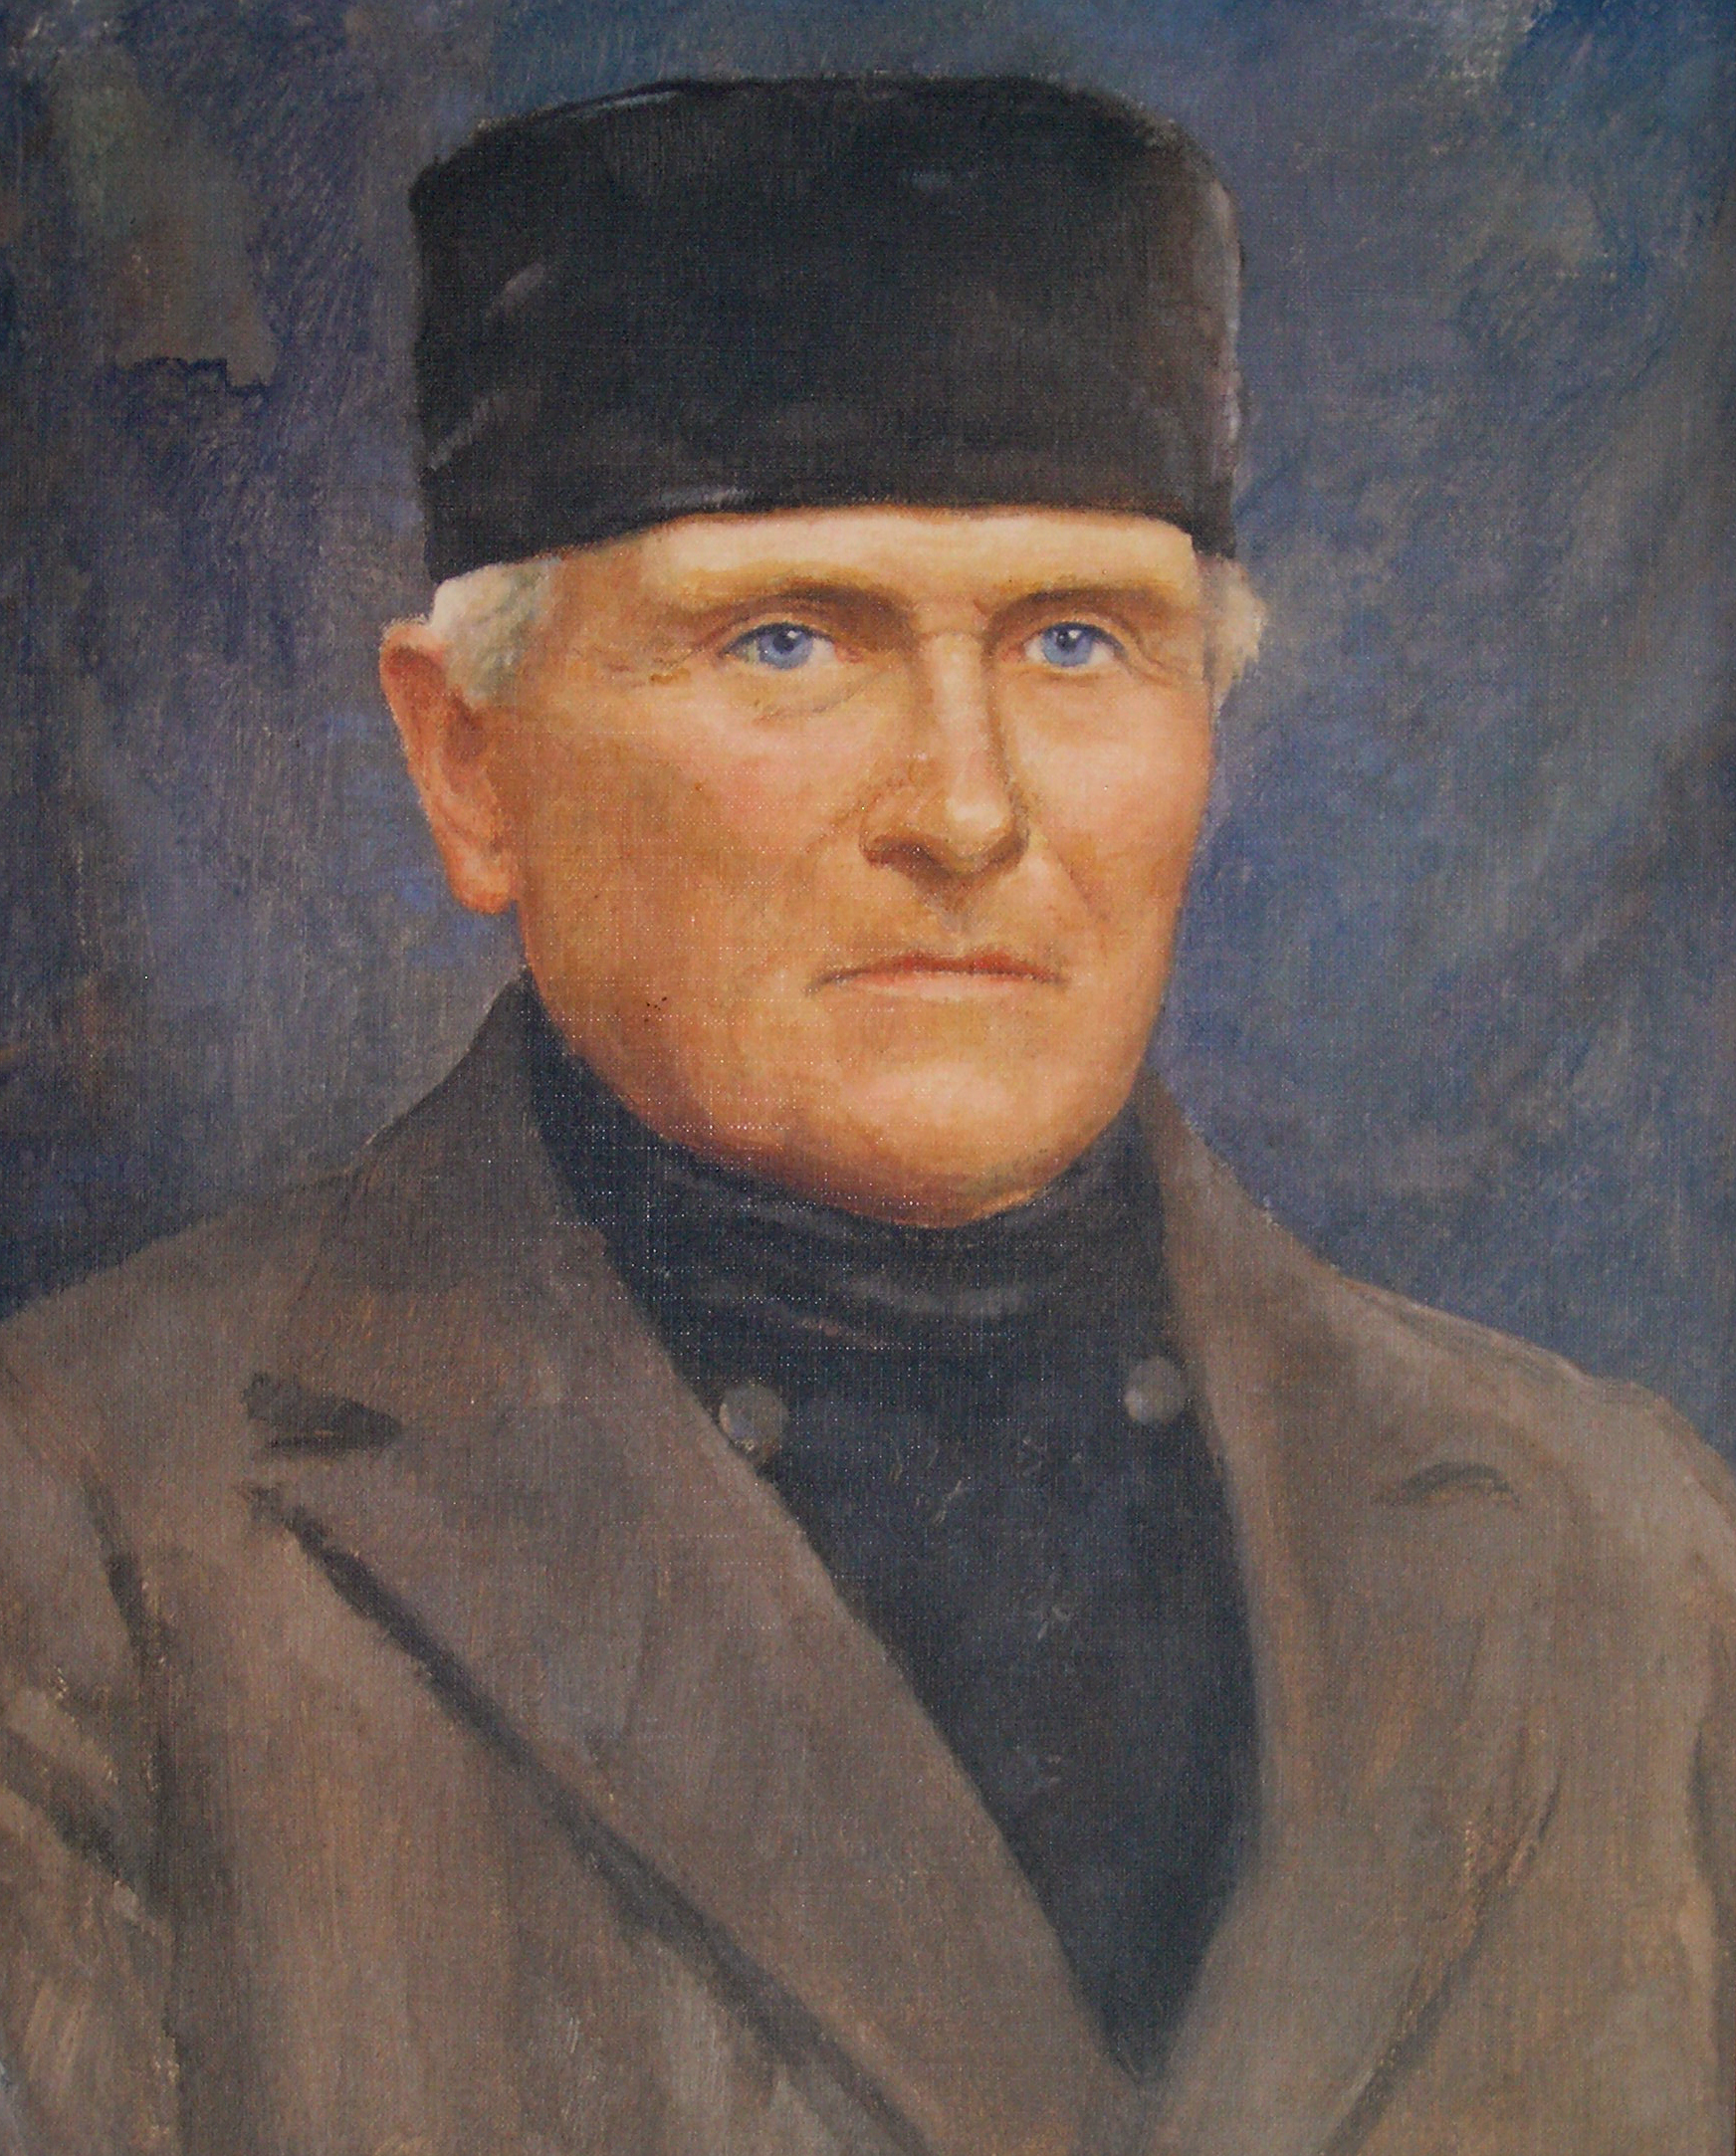 Şirket kurucusu Matthias Christian Rabbethge (1804 - 1902)